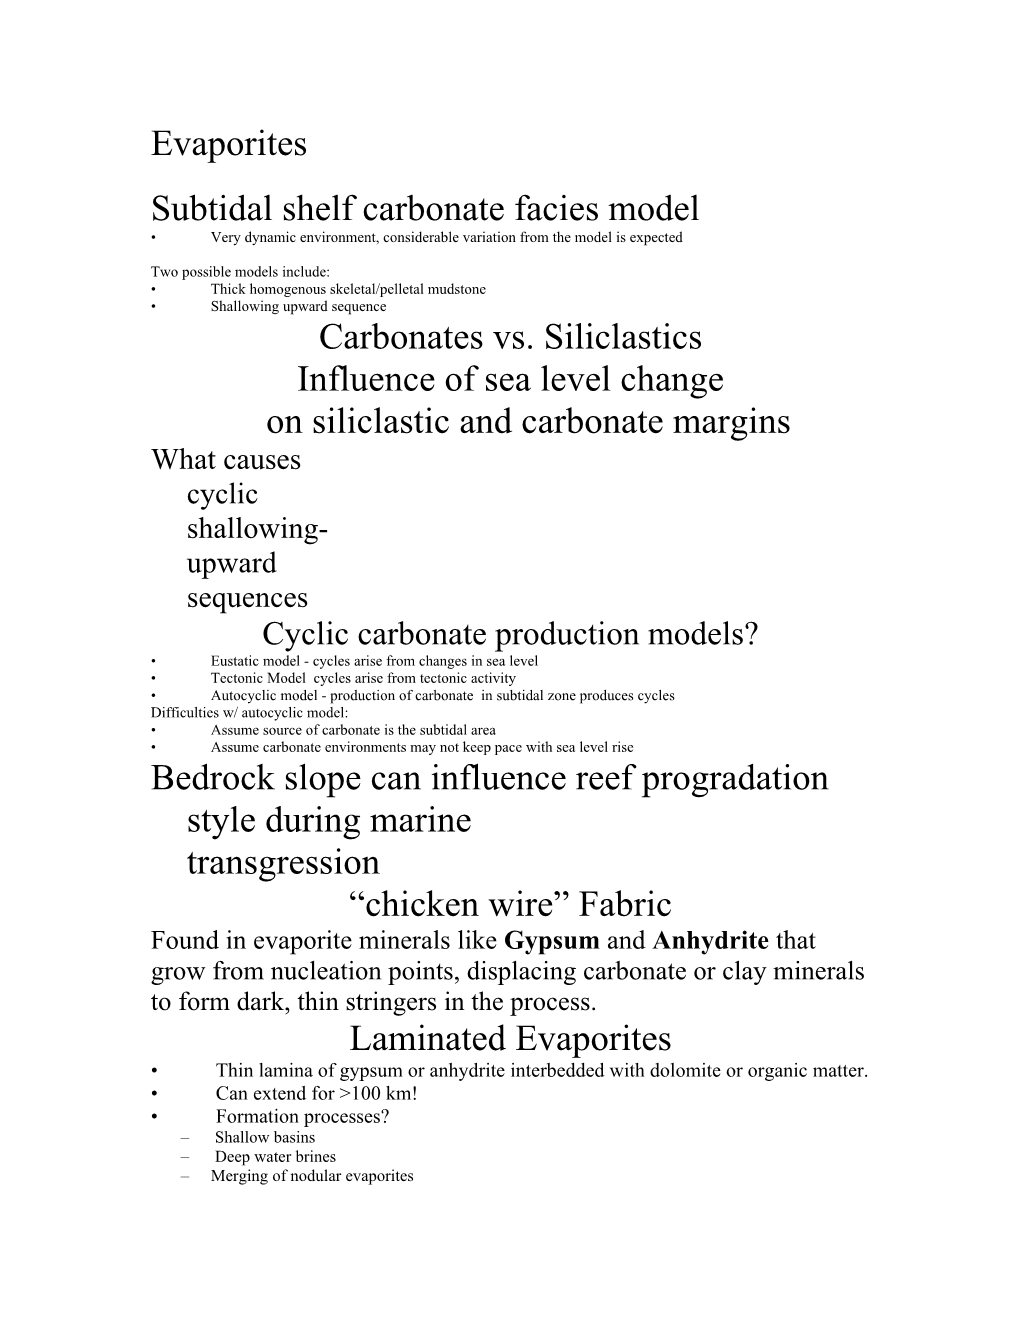 Subtidal Shelf Carbonate Facies Model